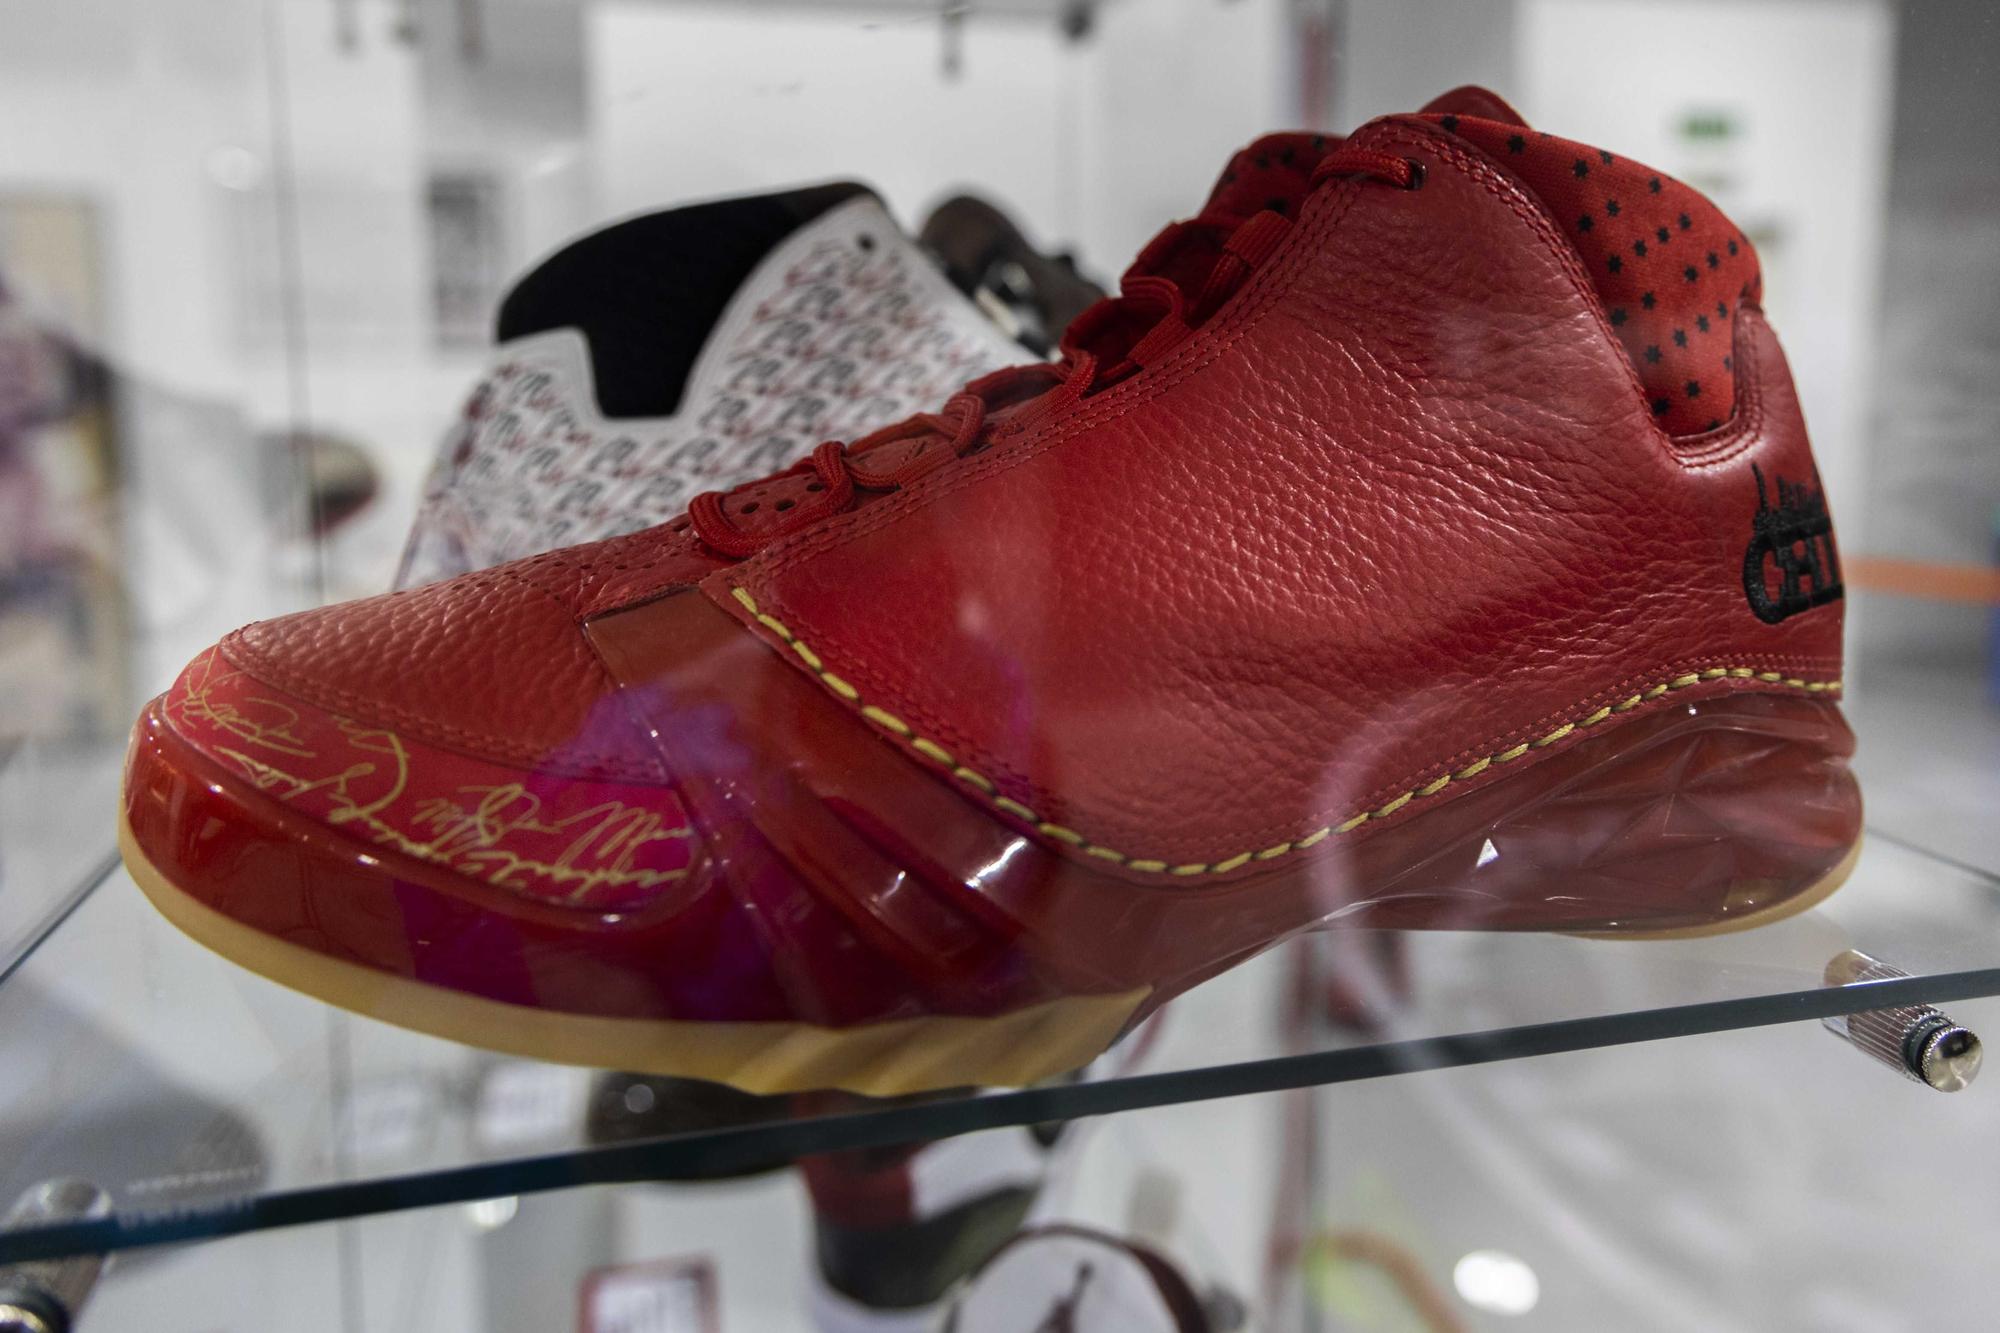 Exposición zapatillas Michael Jordan en Valencia, Las zapatillas de  Michael Jordan revolucionan Valencia